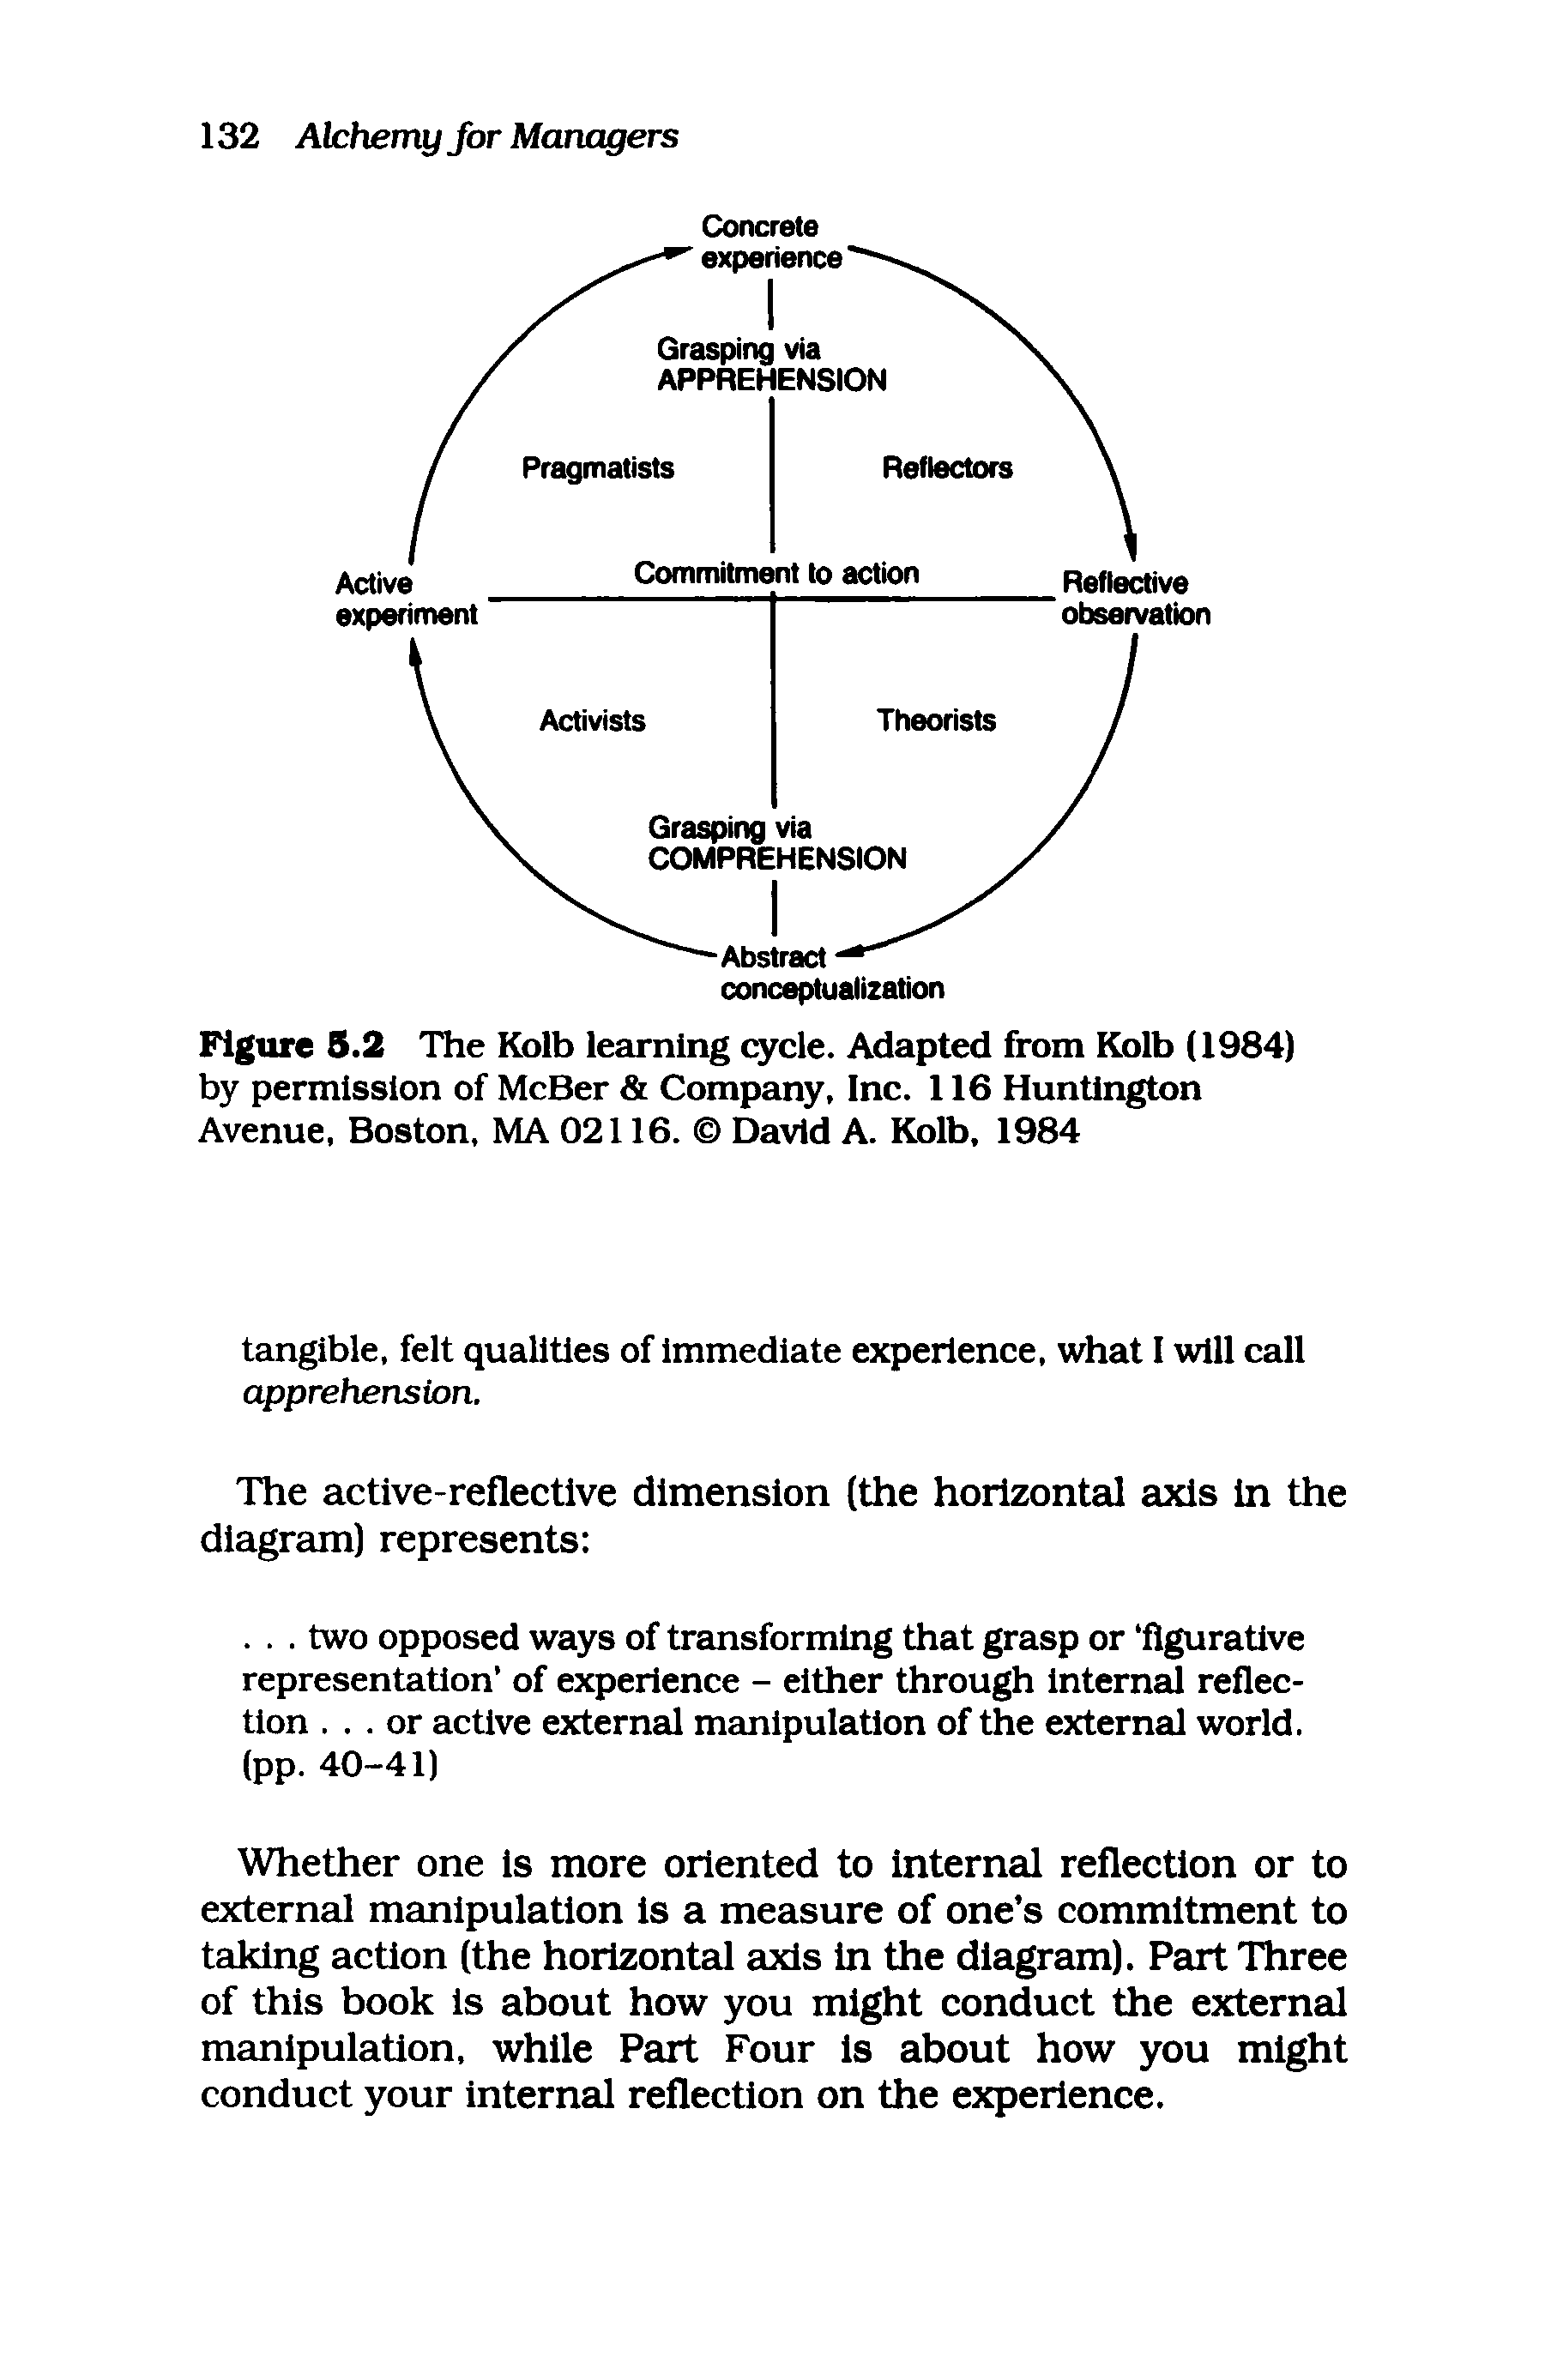 Figure 5.2 The Kolb learning cycle. Adapted from Kolb (1984) by permission of McBer Company, Inc. 116 Huntington Avenue, Boston, MA 02116. David A. Kolb, 1984...